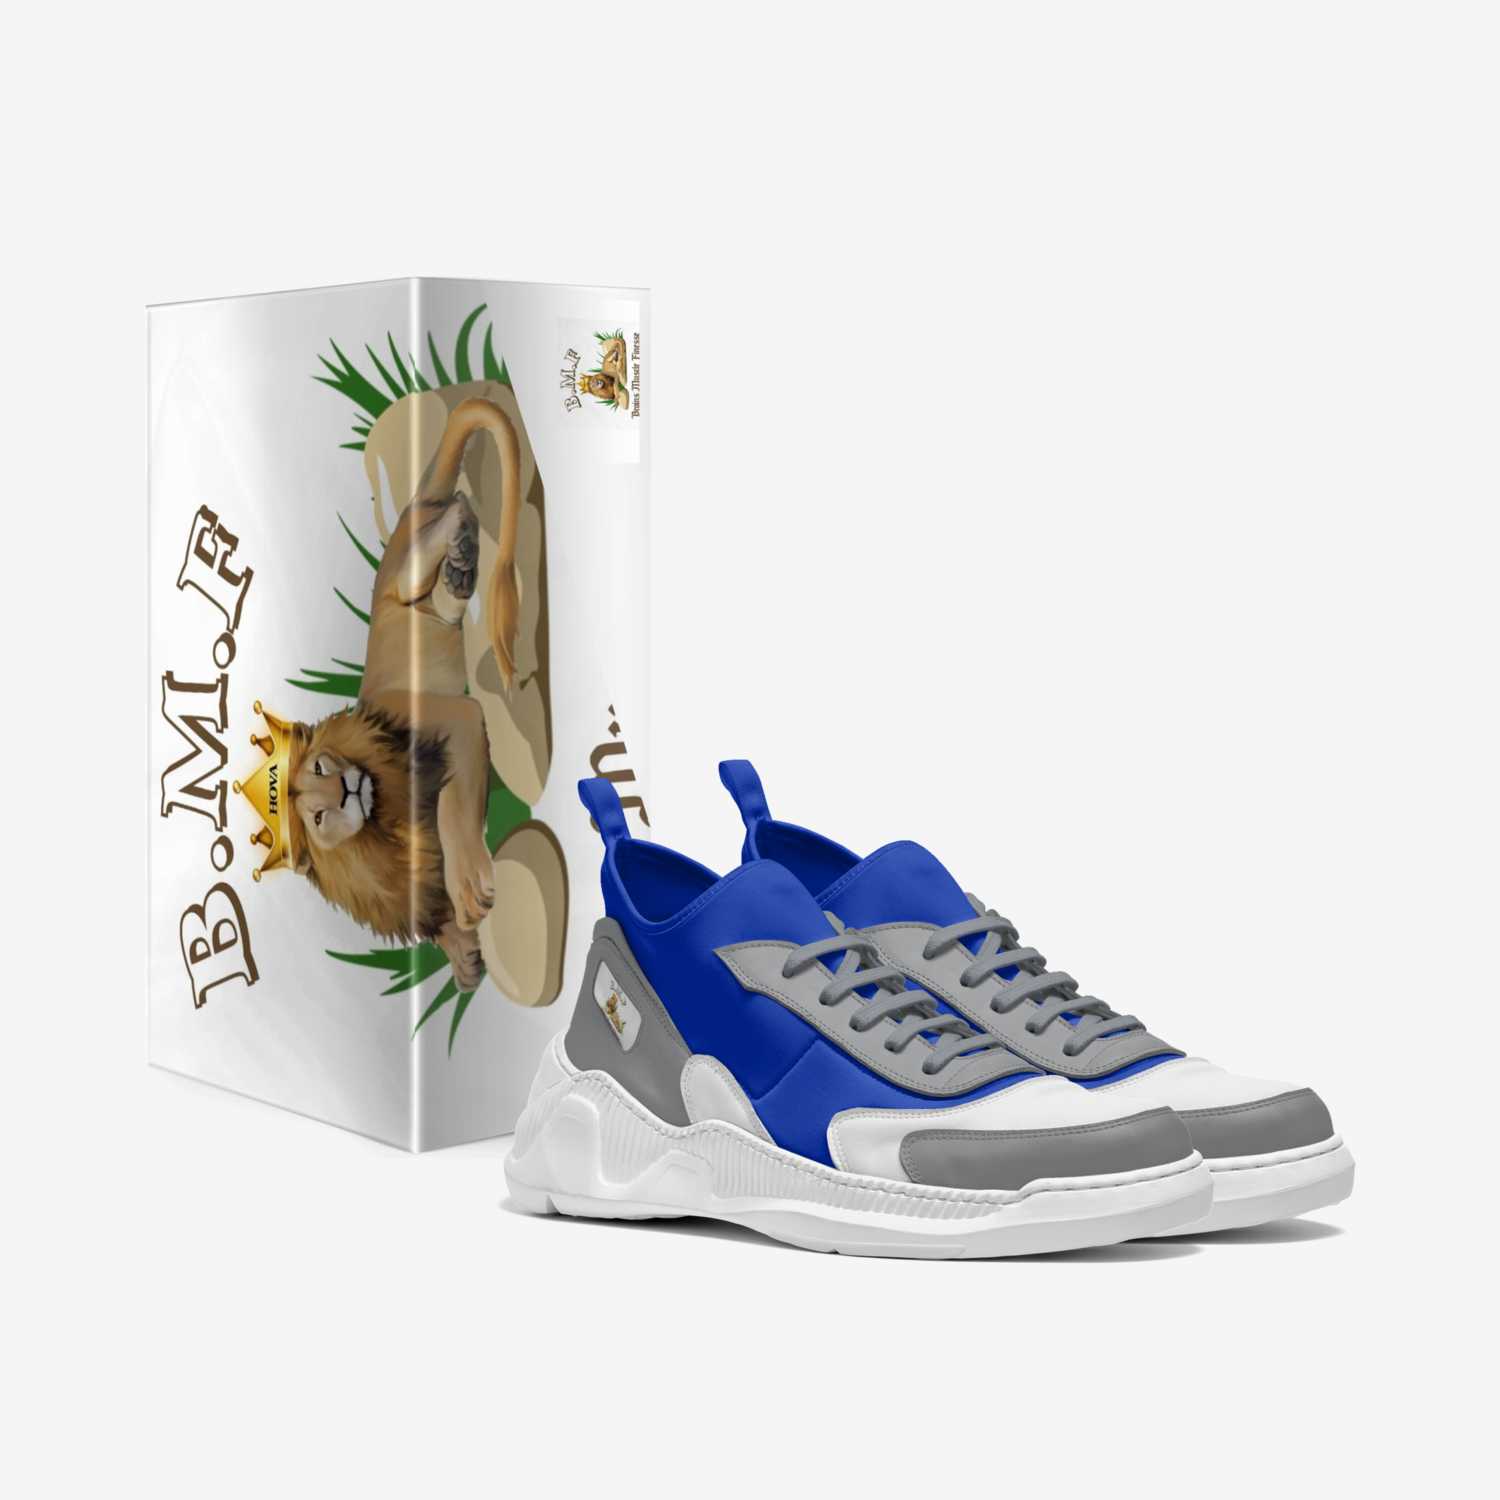 Hova4 custom made in Italy shoes by Jermaine Zeno | Box view